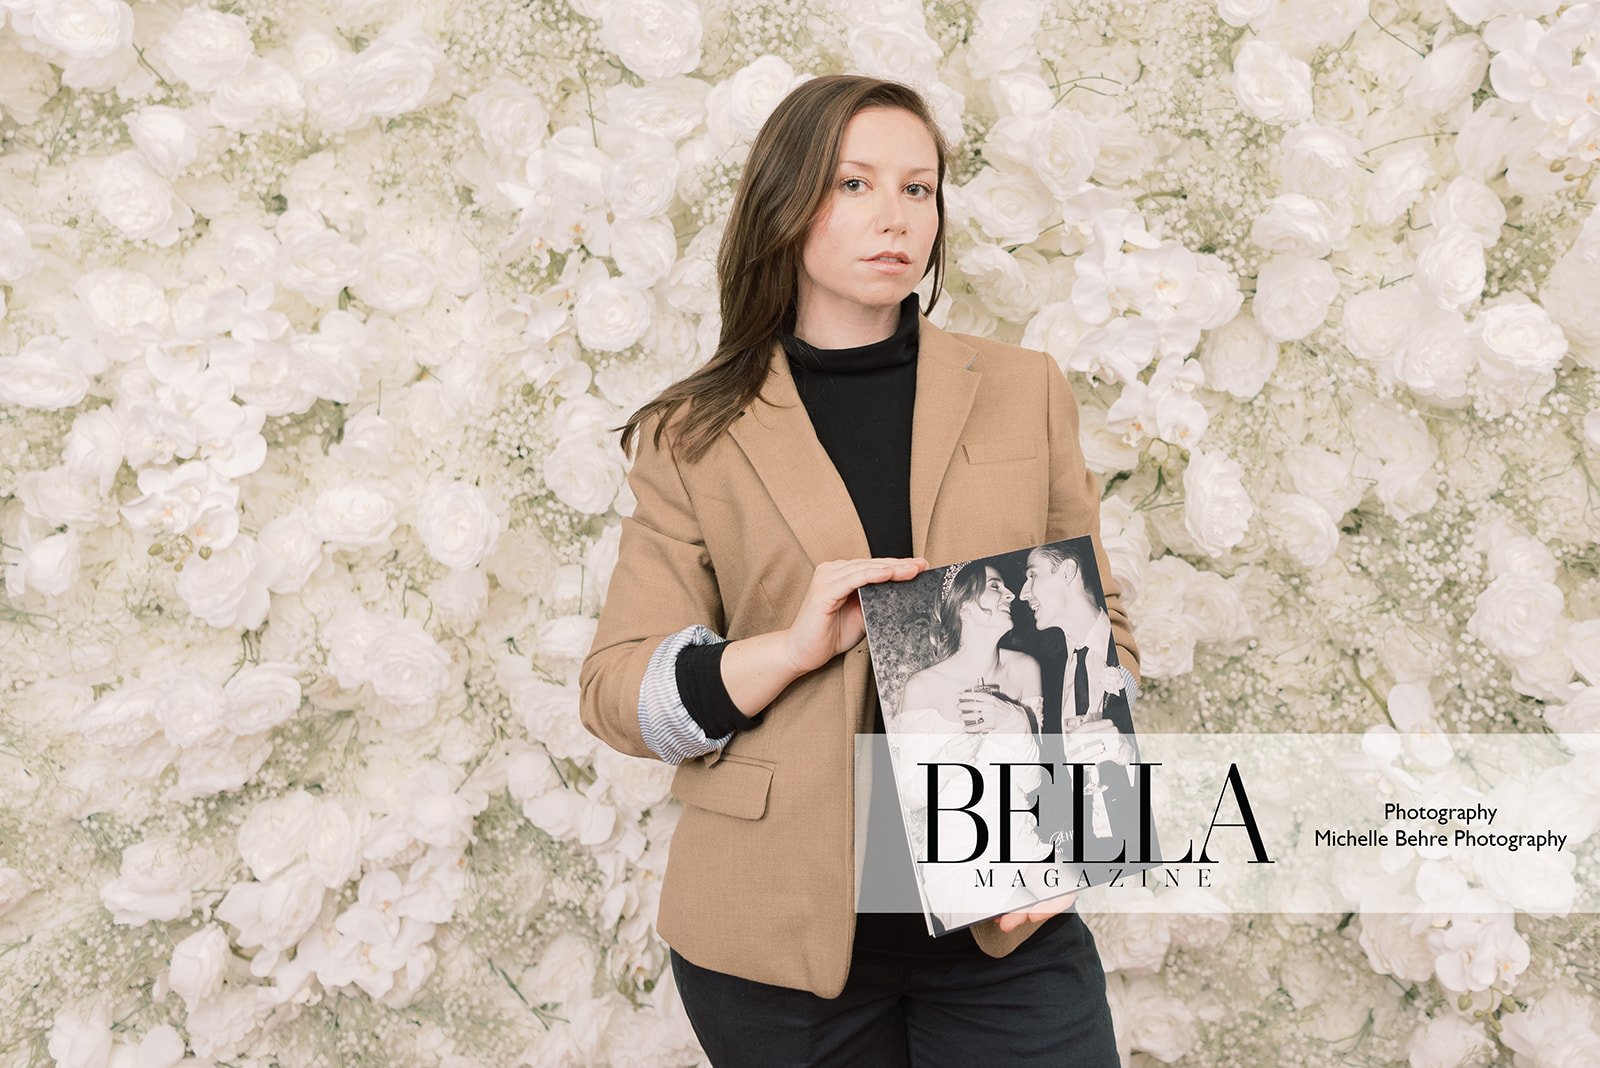 Michelle-Behre-Photography-BELLA-Magazine-Wedding-Event-La-Pulperia-New-York-116.jpg